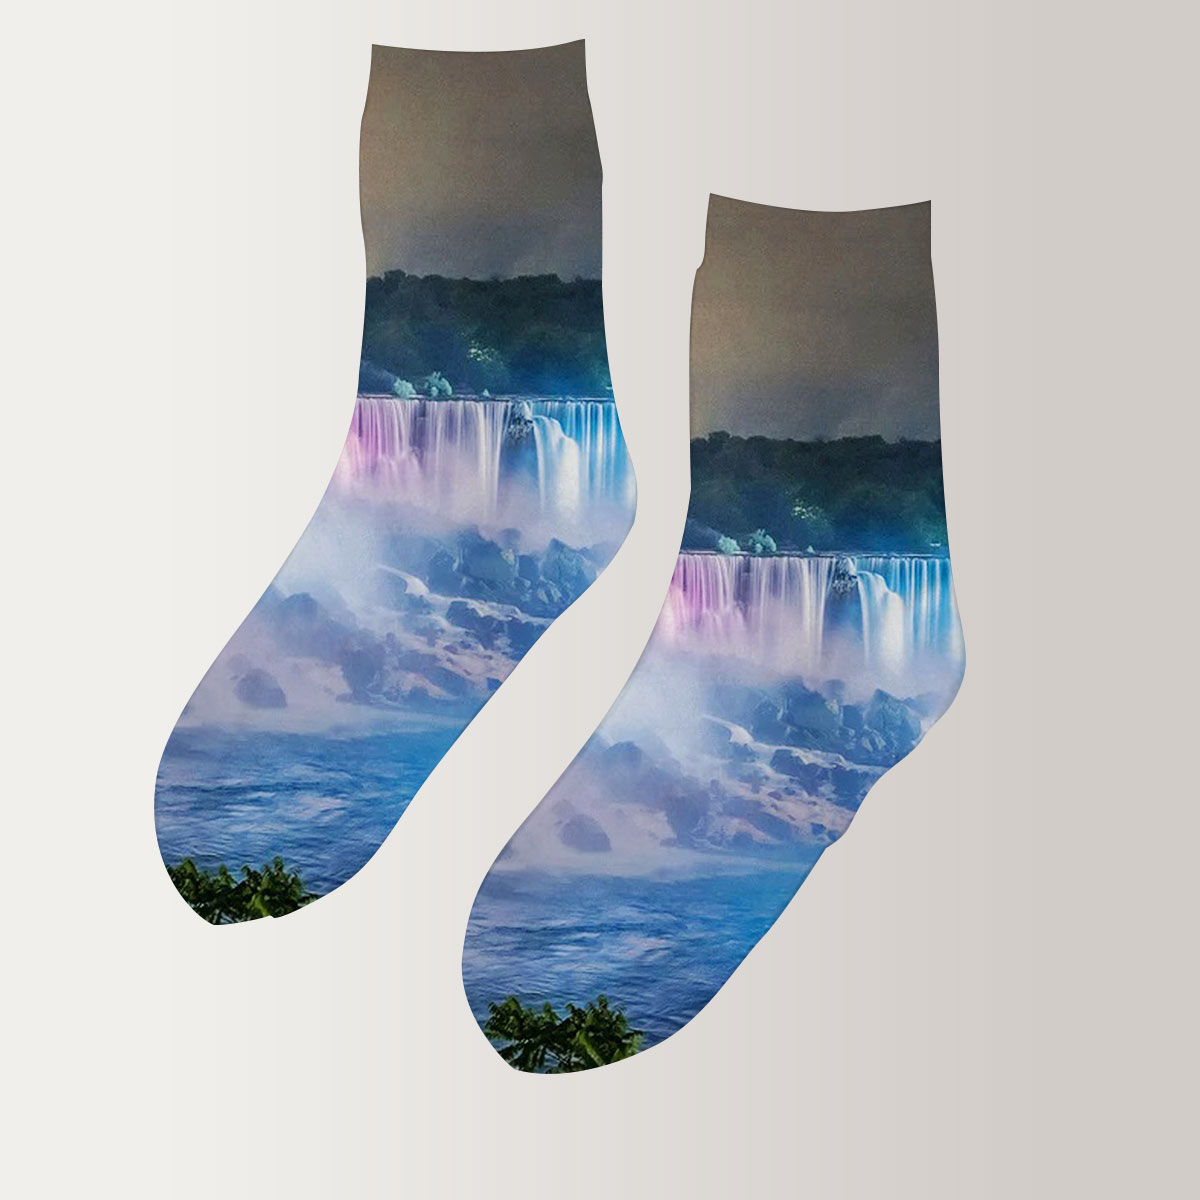 Niagara Falls by Night 3D Socks